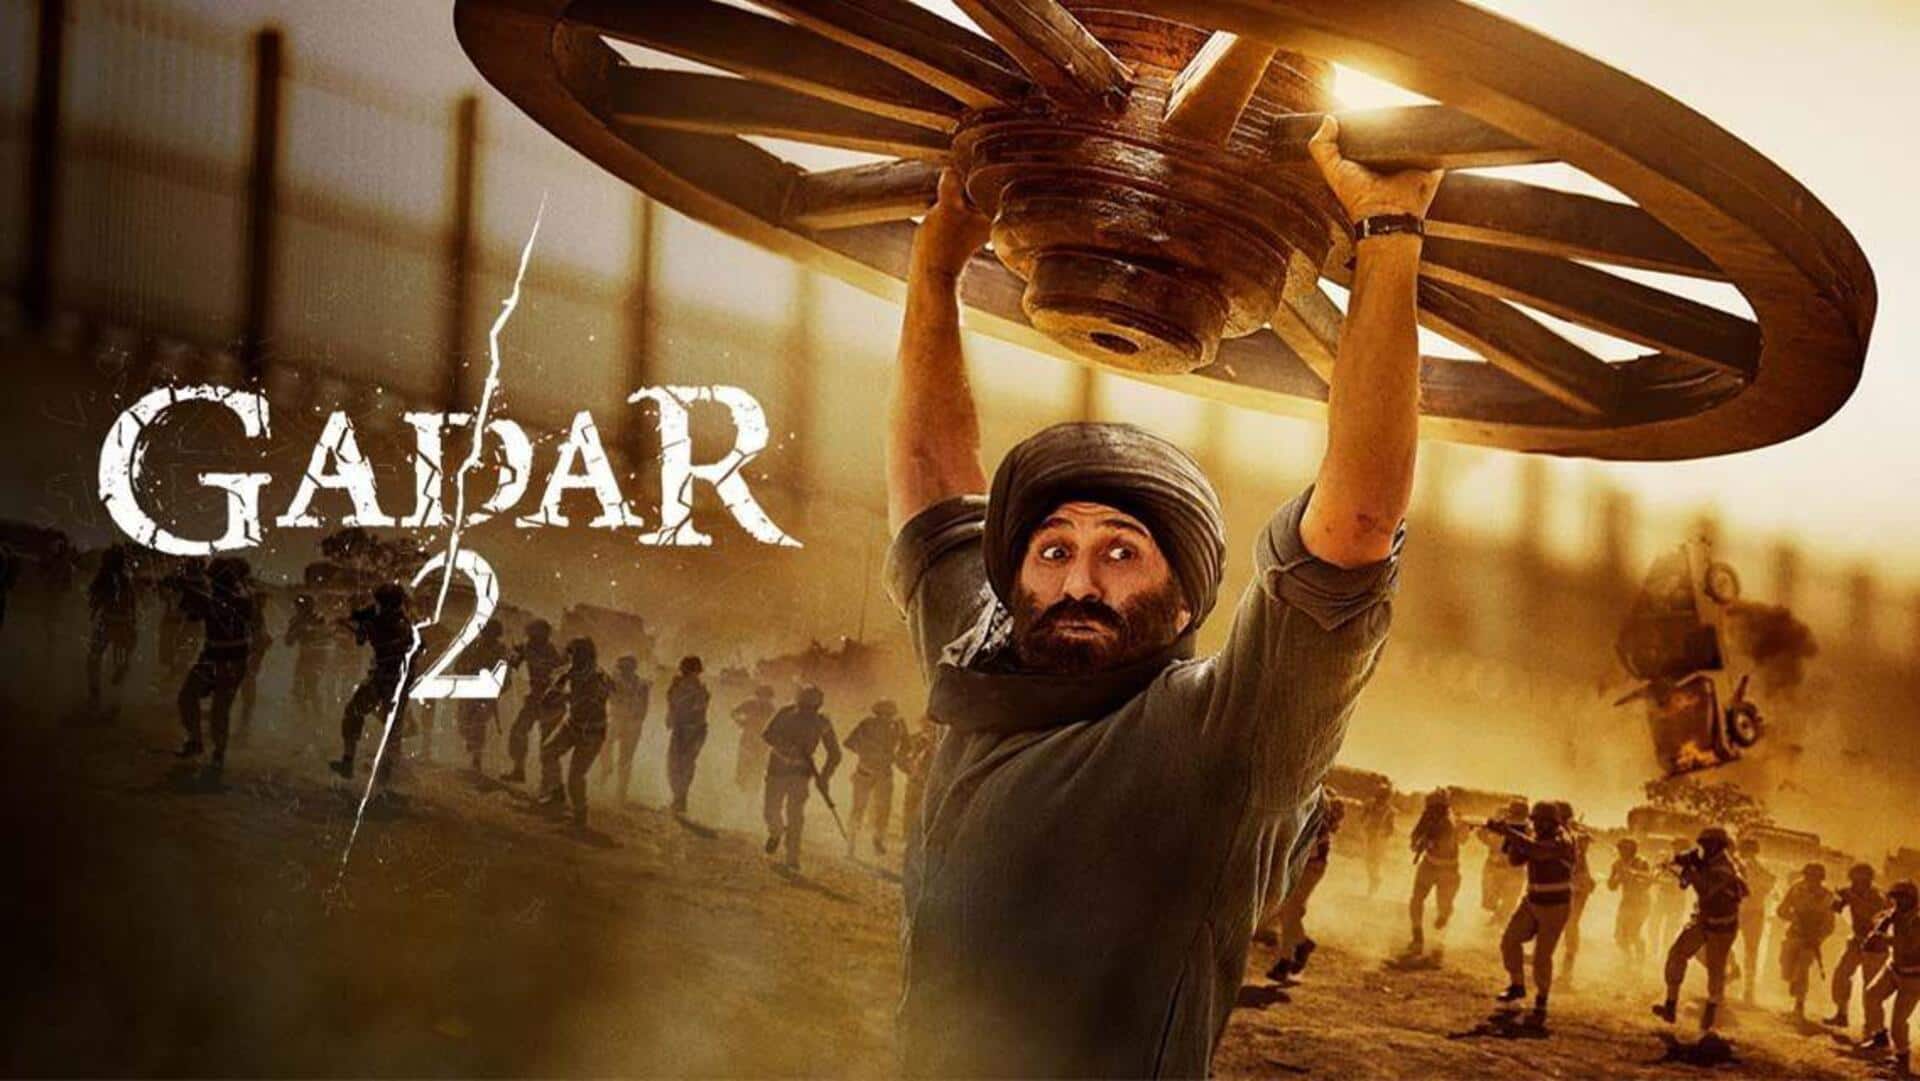 Box office collection: 'Gadar 2' is on autopilot mode